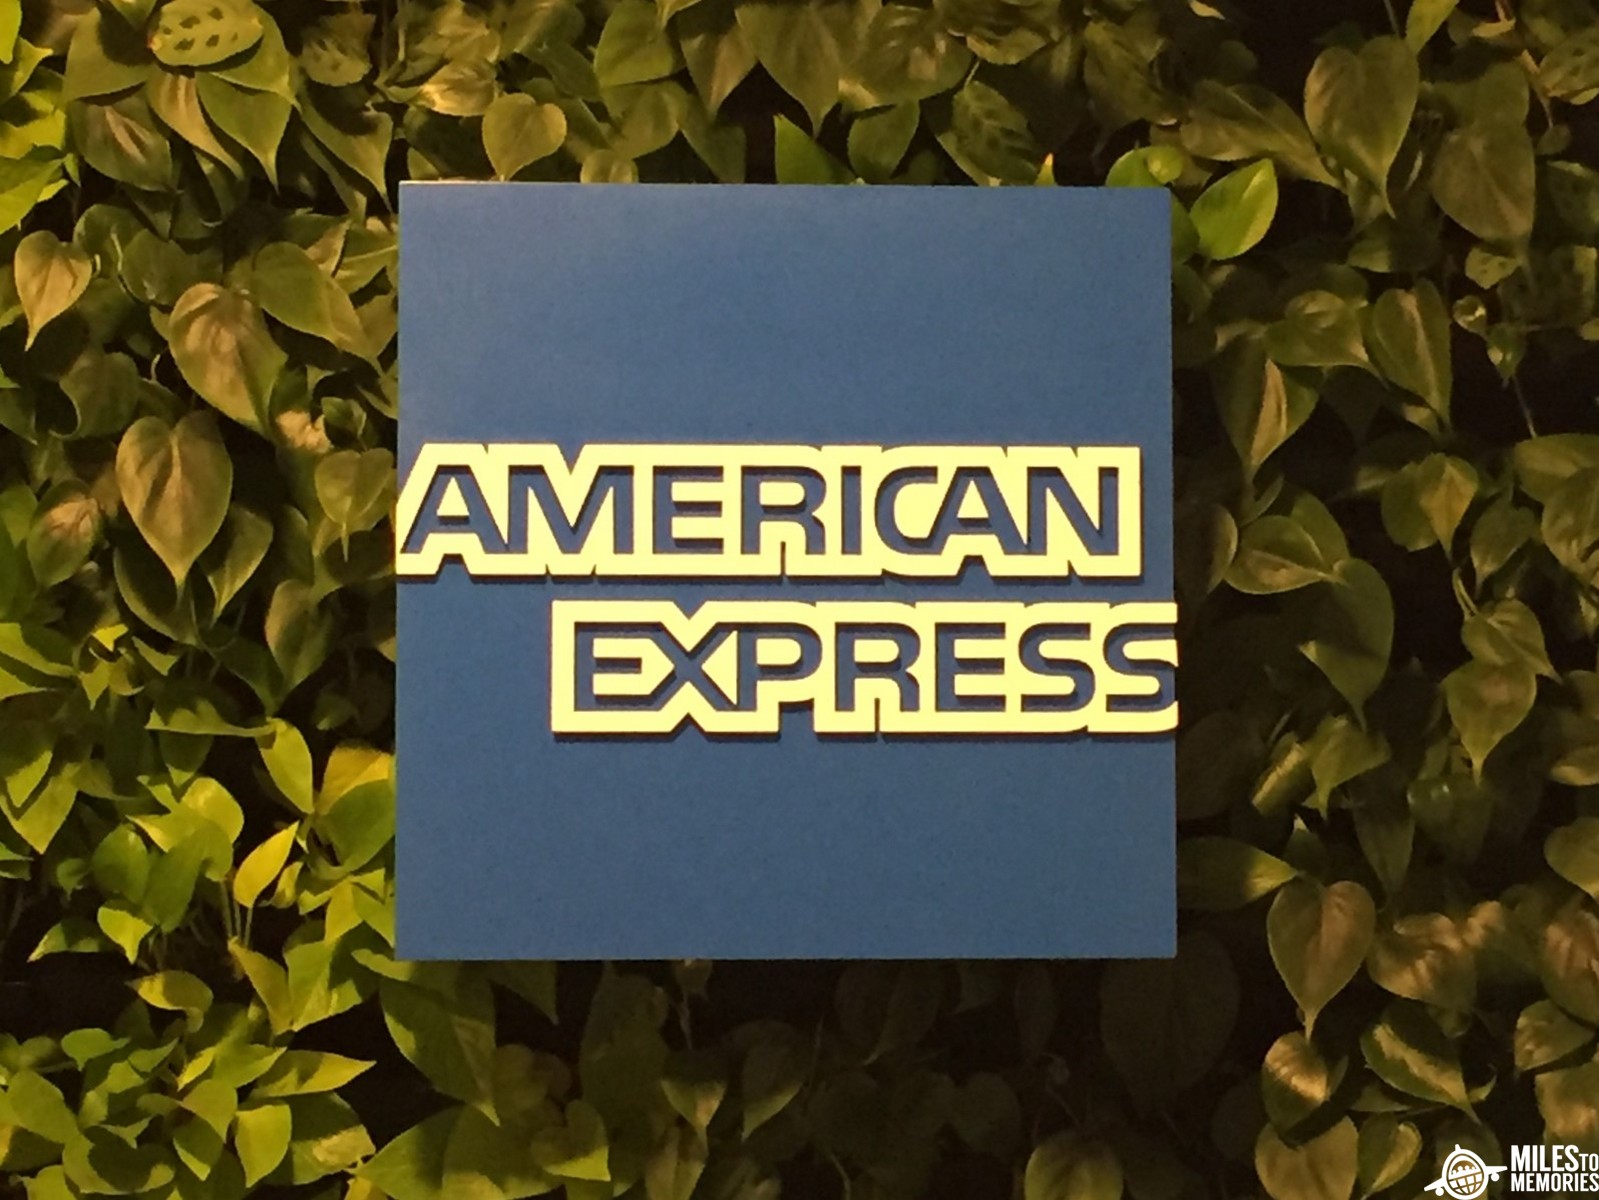 Guide: American Express Membership Rewards Points